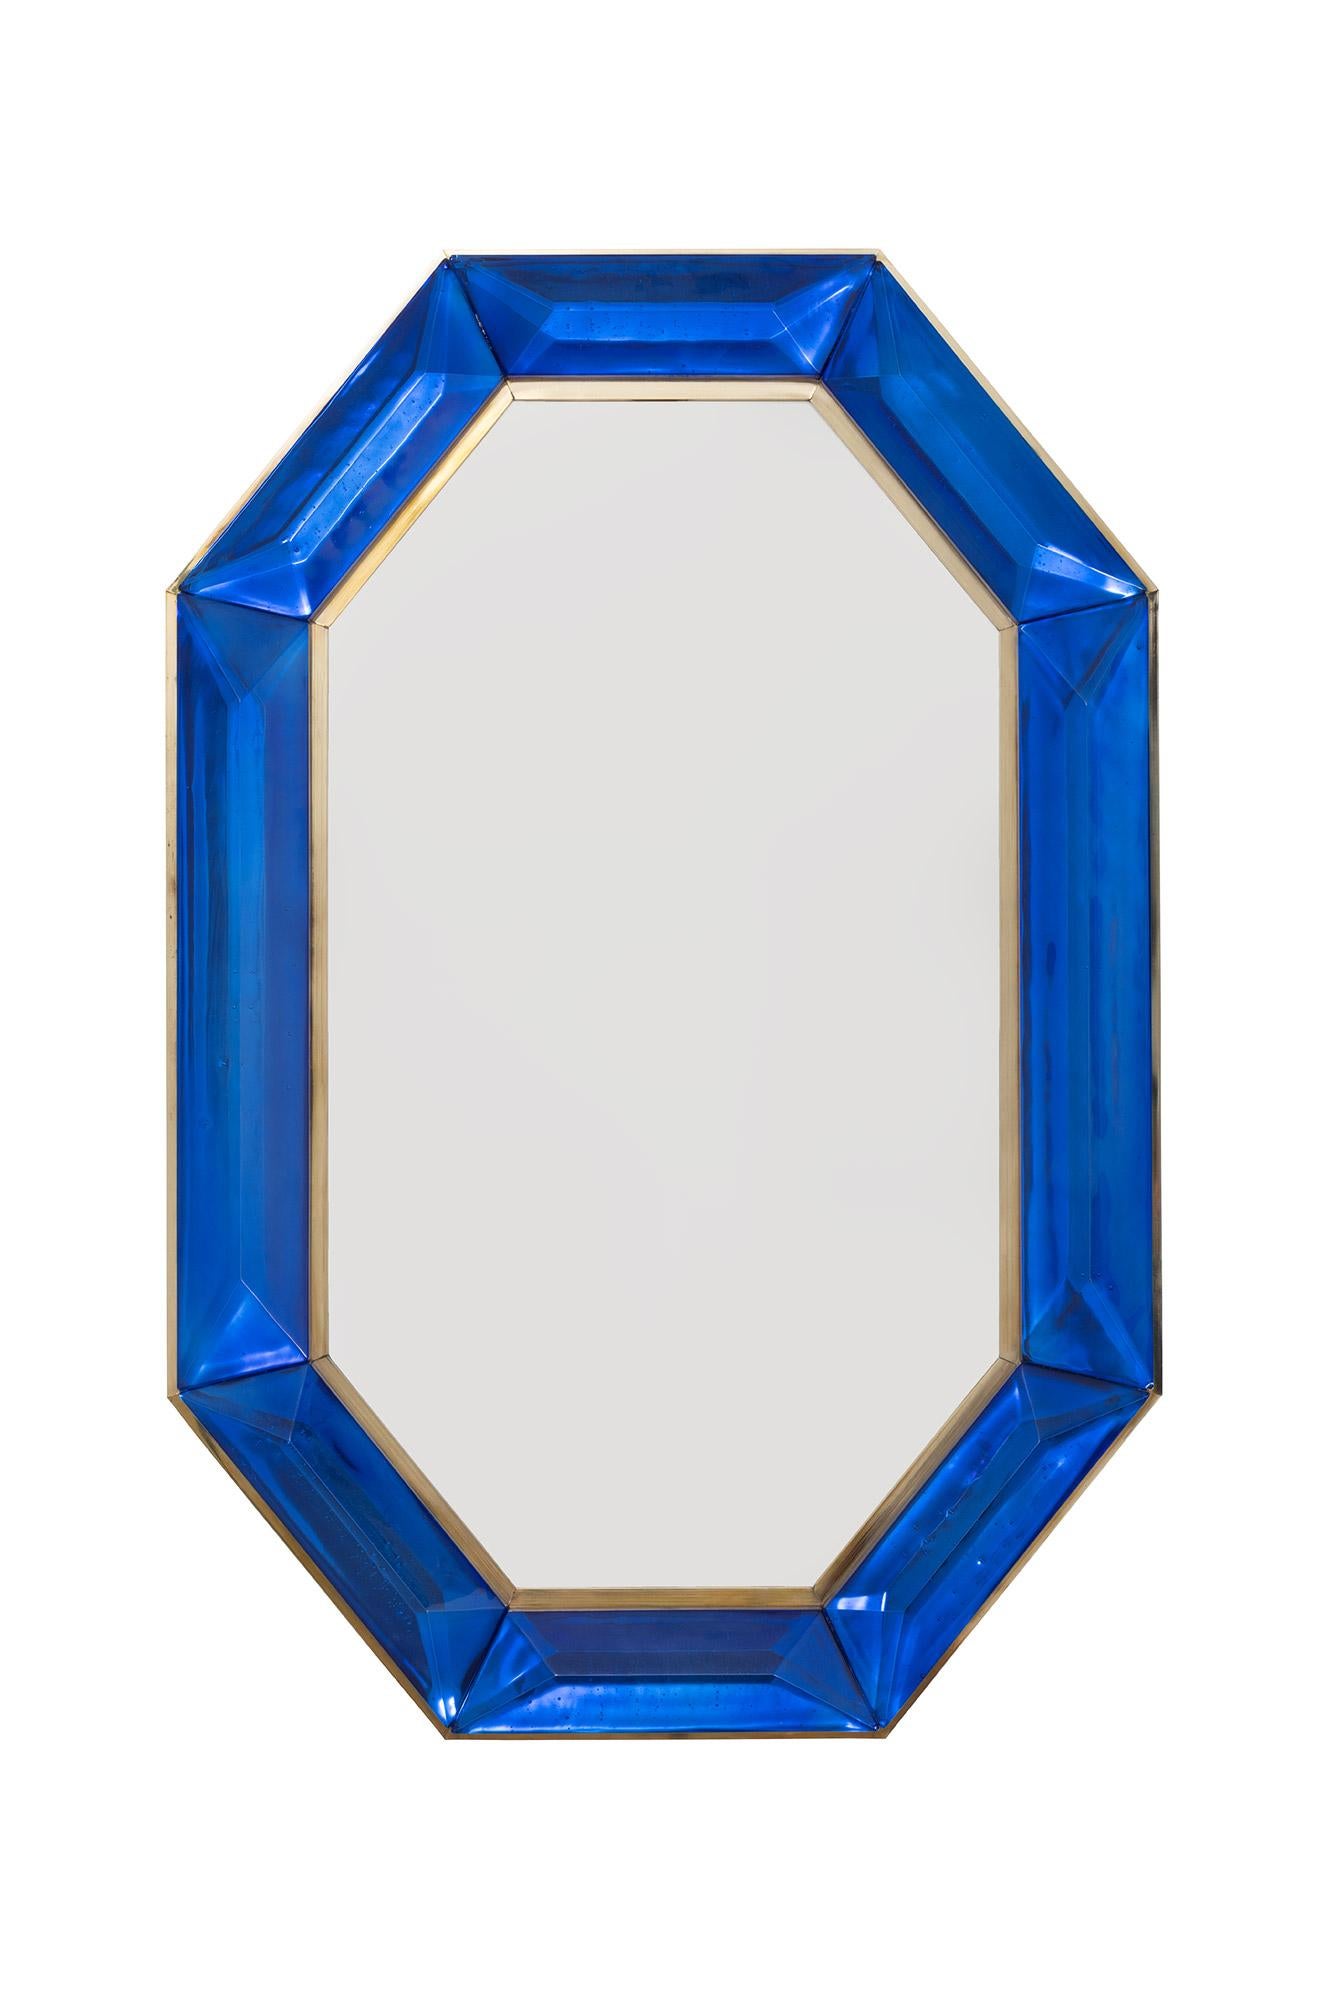 Paire de miroirs octogonaux en verre de Murano bleu cobalt sur mesure, en stock en vente 1